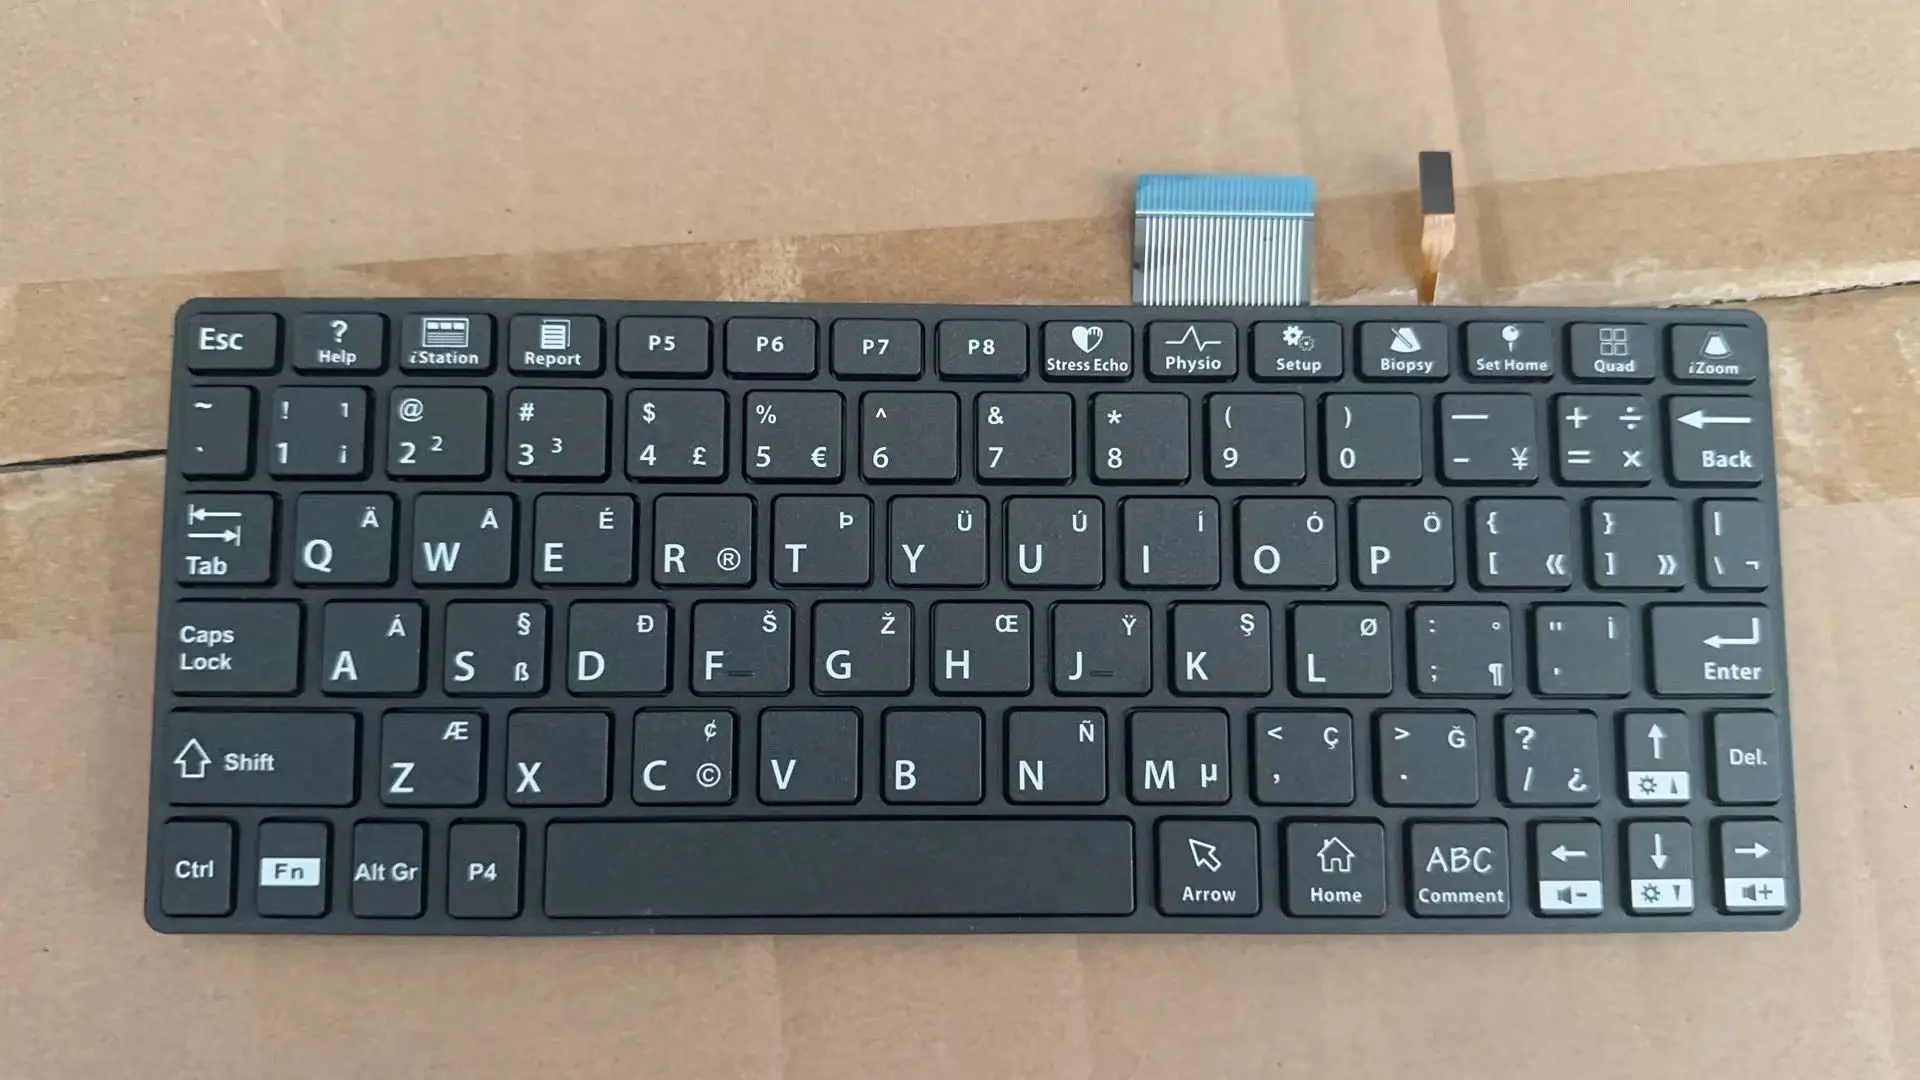 043-003590-00 New Original Alphanumeric keyboard for Mindray M9